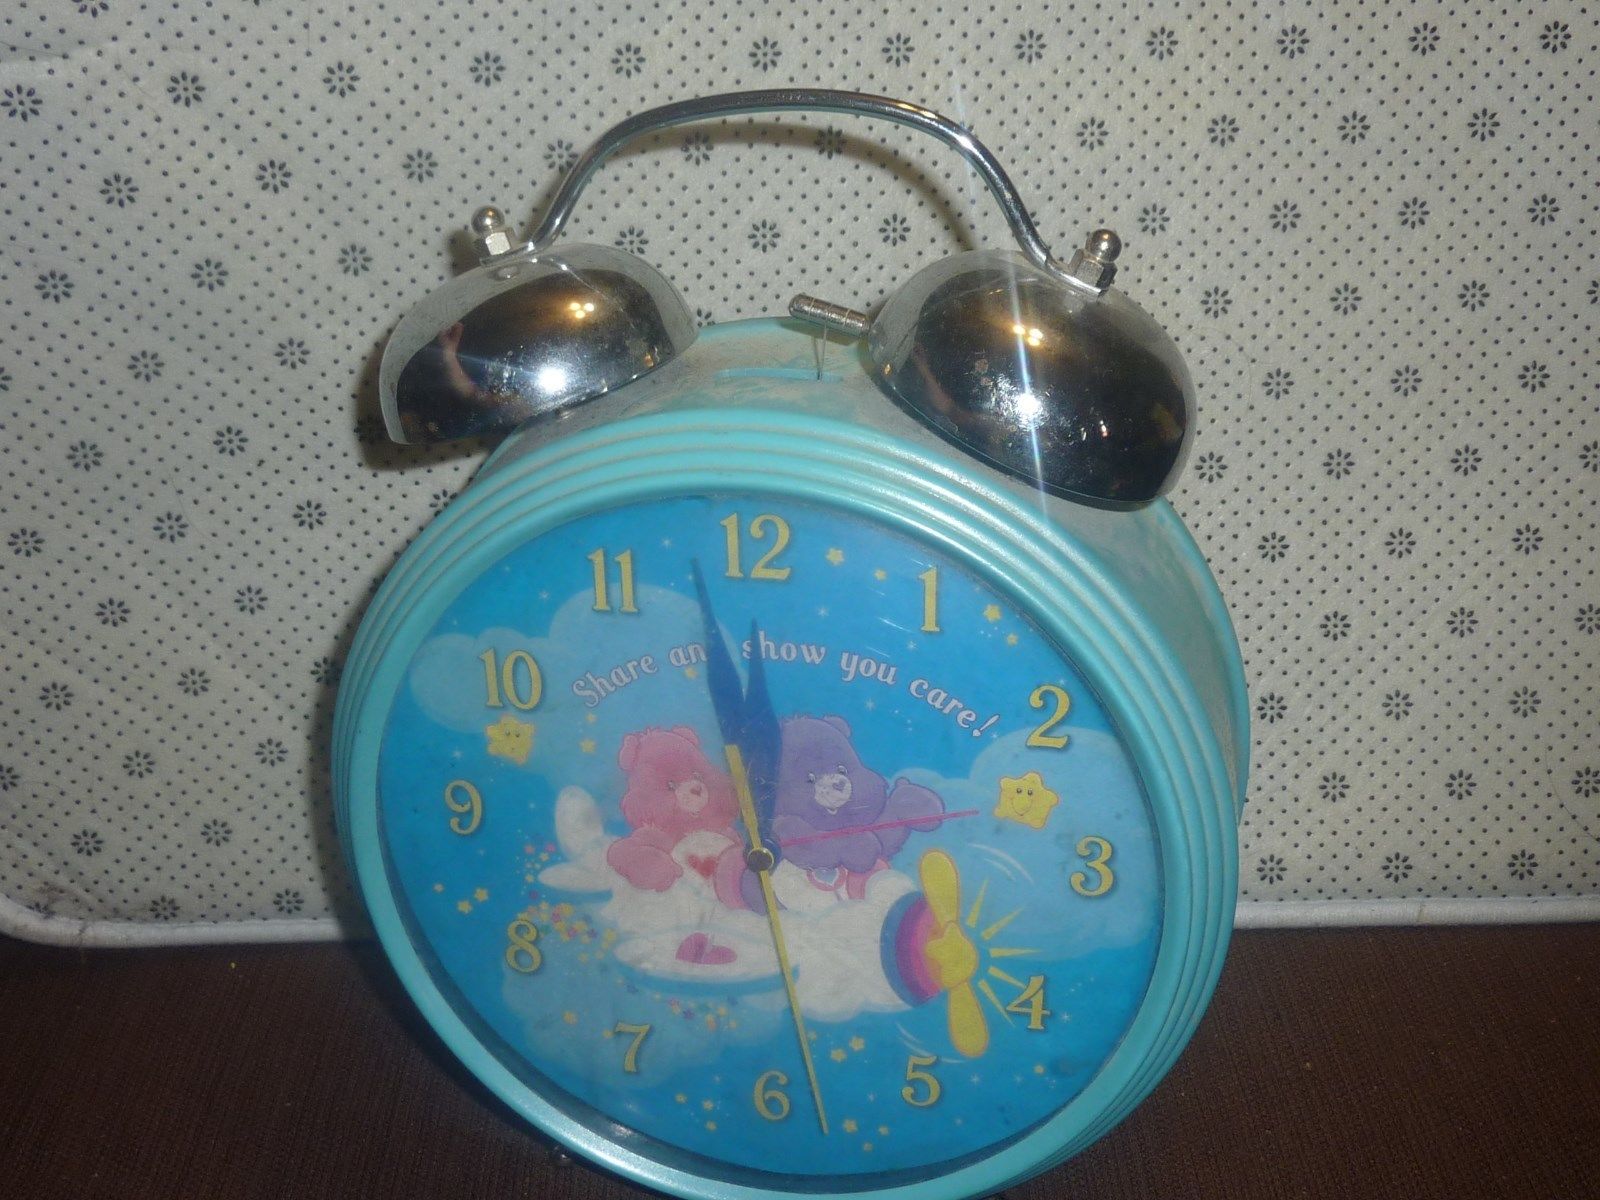 The Care Bears Large Jumbo Alarm Clock 2004 